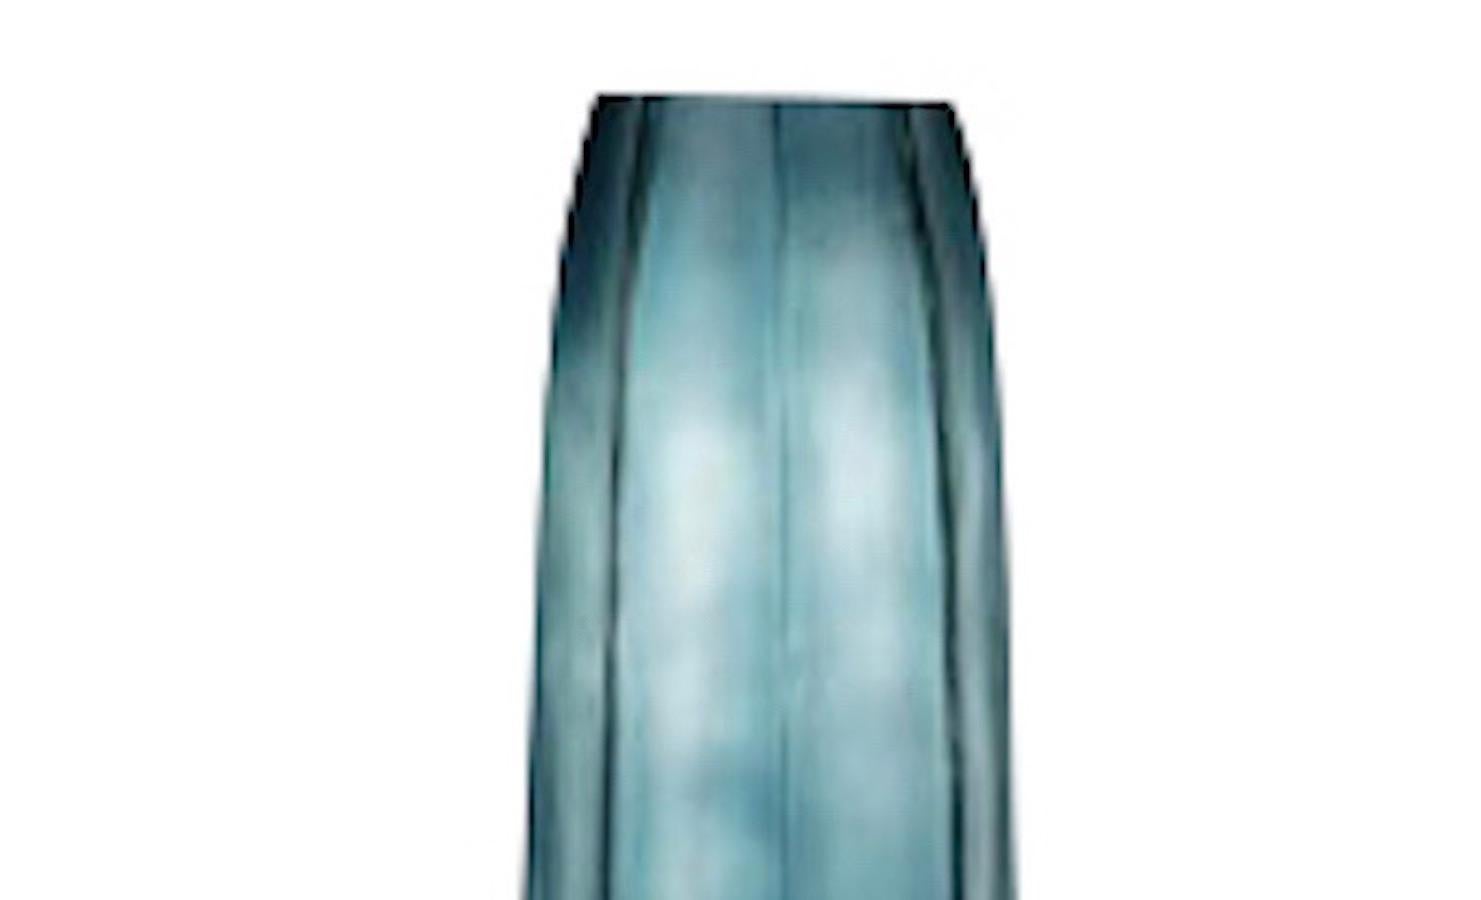 Contemporary Romanian tall deep blue glass vase.
Vertical cubist design.
Shorter version available S5572.
Arriving TBD.